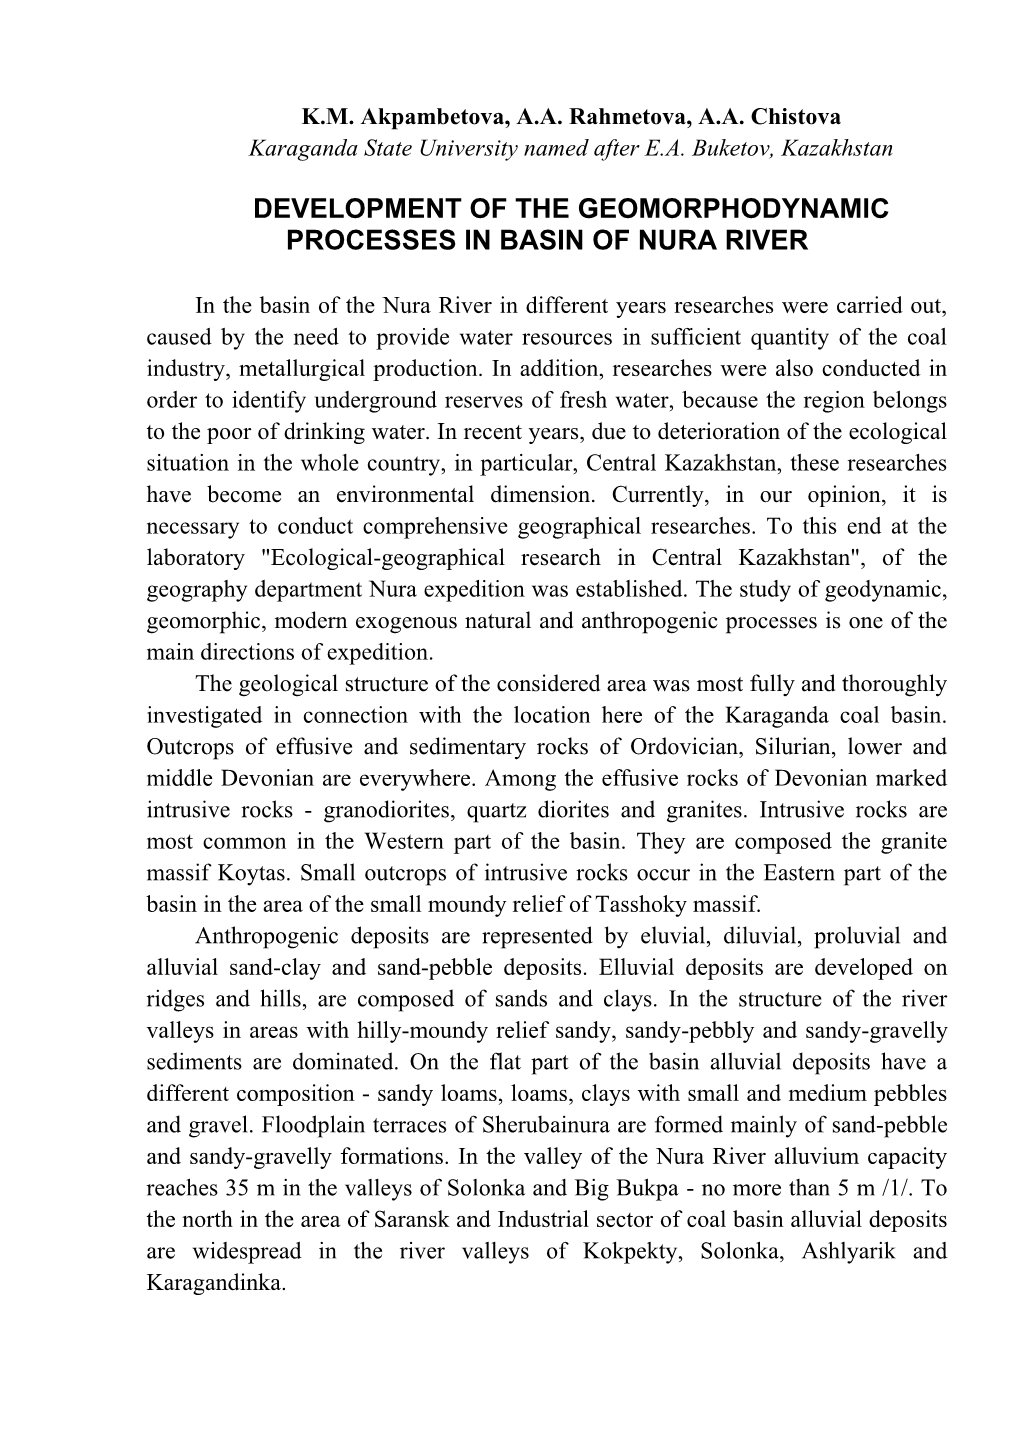 Development of the Geomorphodynamic Processes in Basin of Nura River